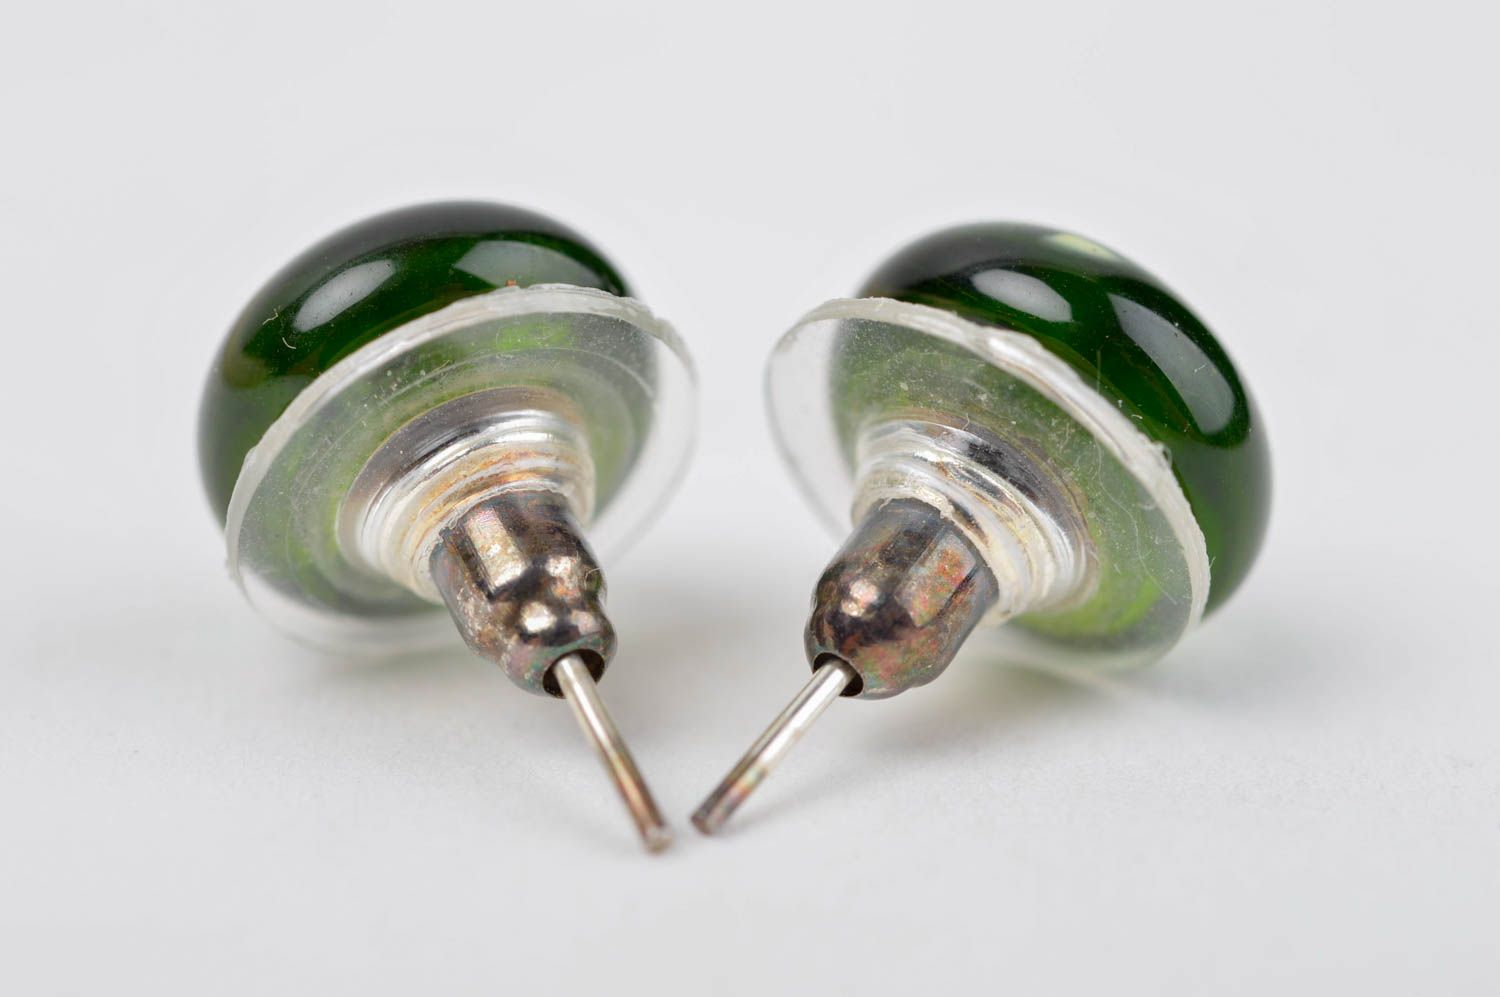 Handmade glass earrings stud earrings design artisan jewelry gifts for her photo 4